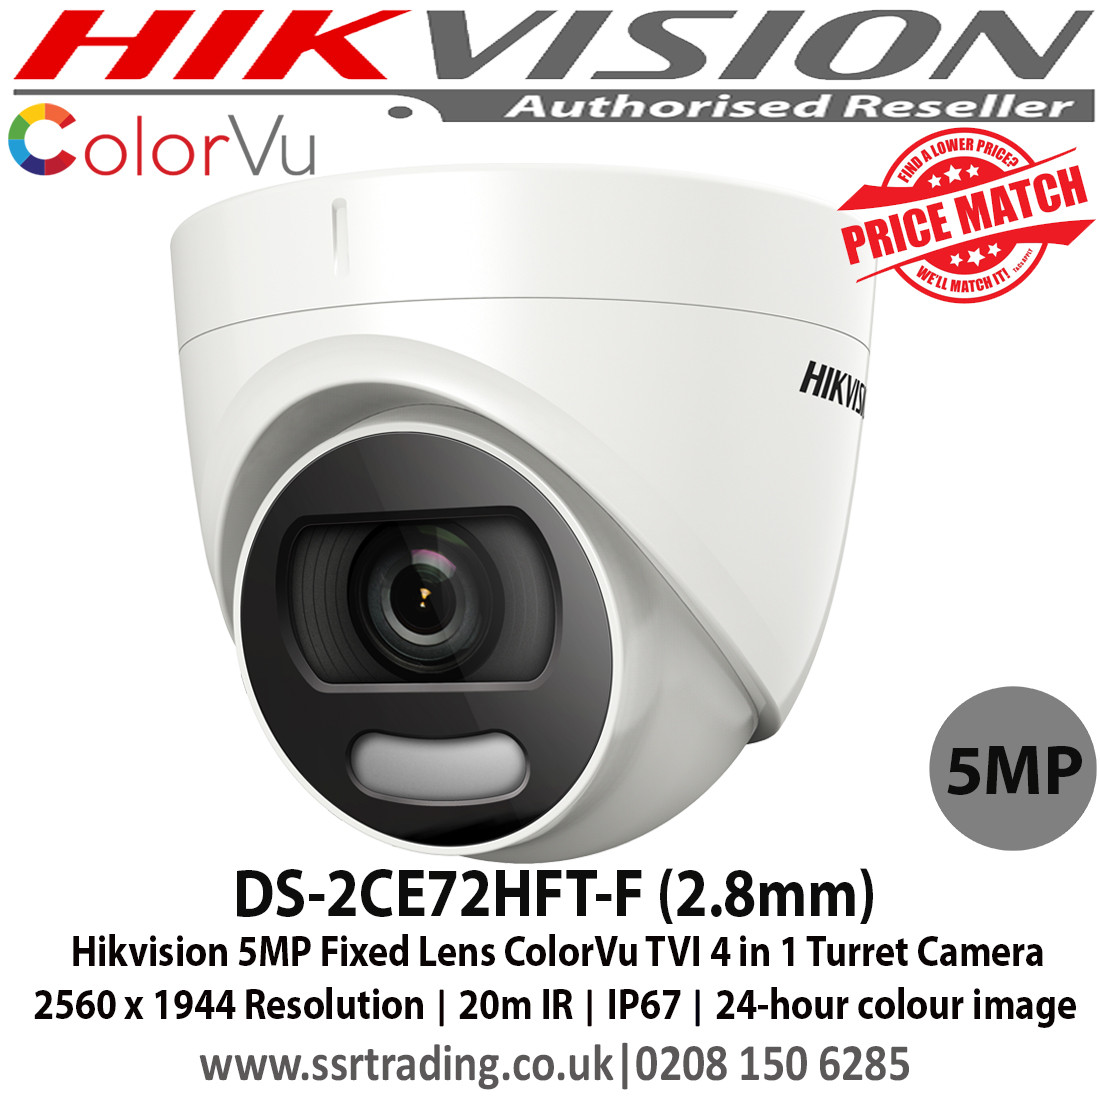 Hikvision HIKVISION TRADE CCTV 5MP COLORVU CAMERA DS-2CE72HFT-F28 24H COLOR RECORDING UK 